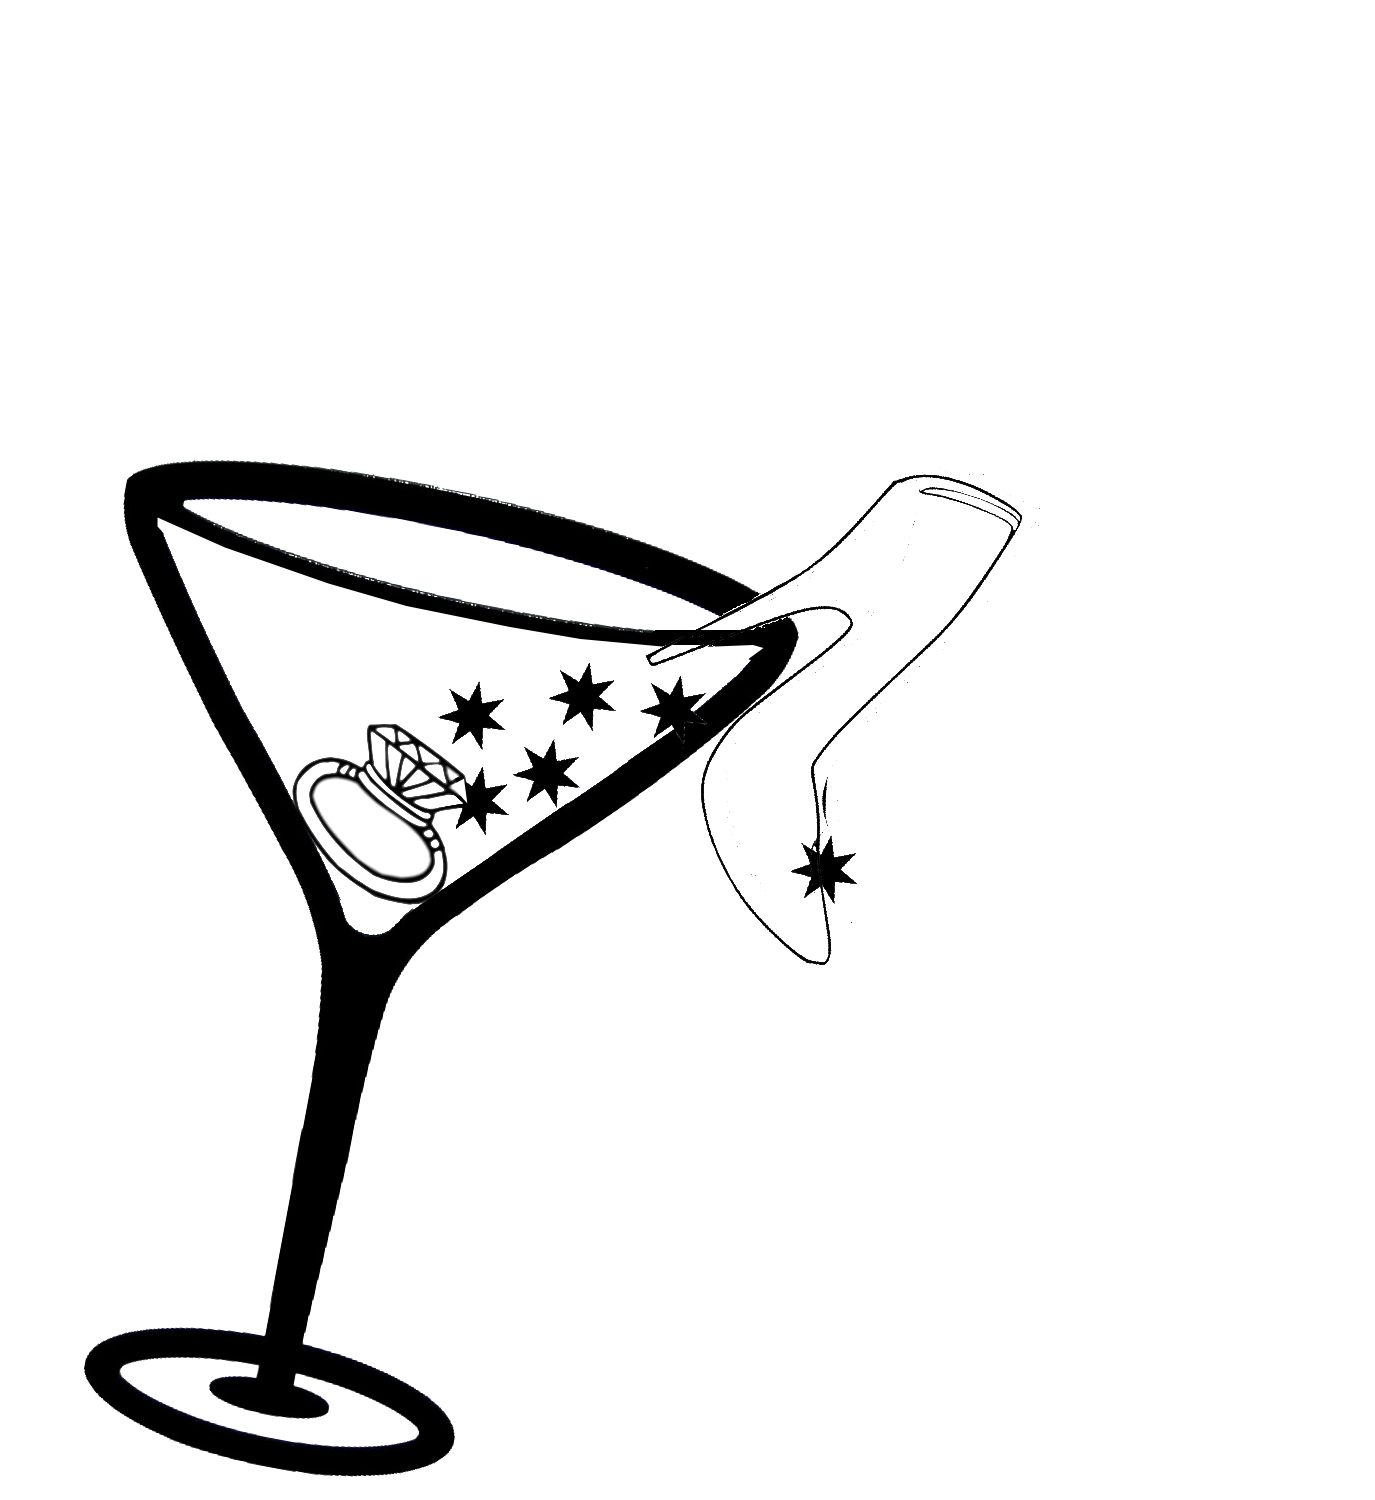 Martini glass image of bachelorette clipart 2 images for bachelorette